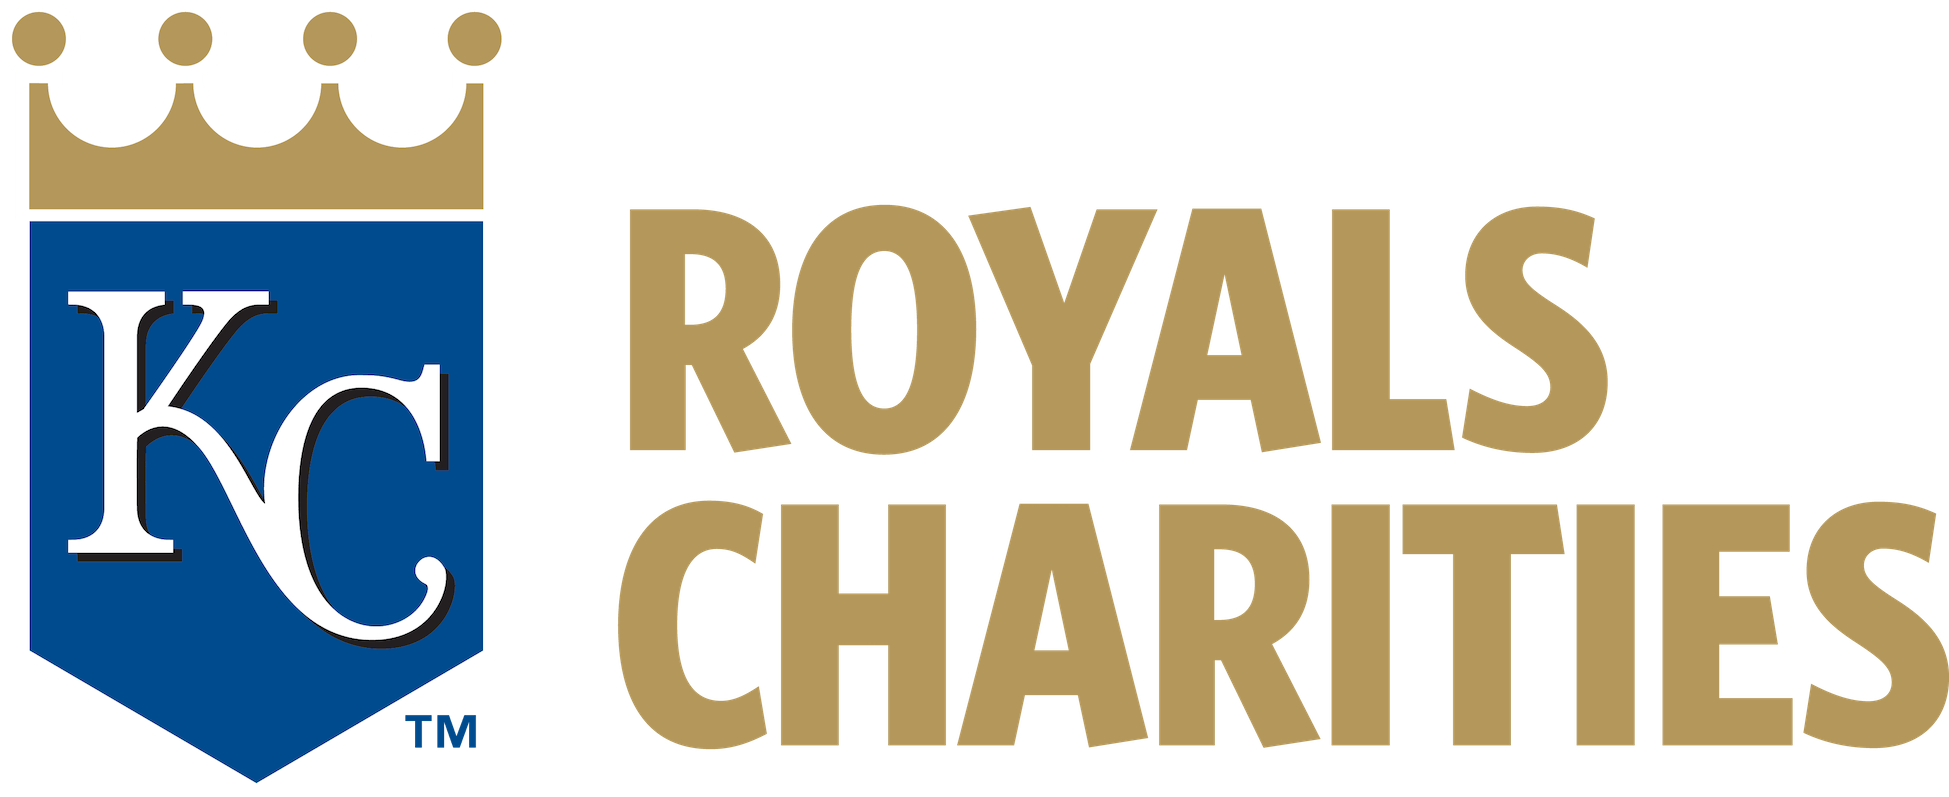 Transparent Royals Logo - Kansas city royals crown logo graphic royalty free stock